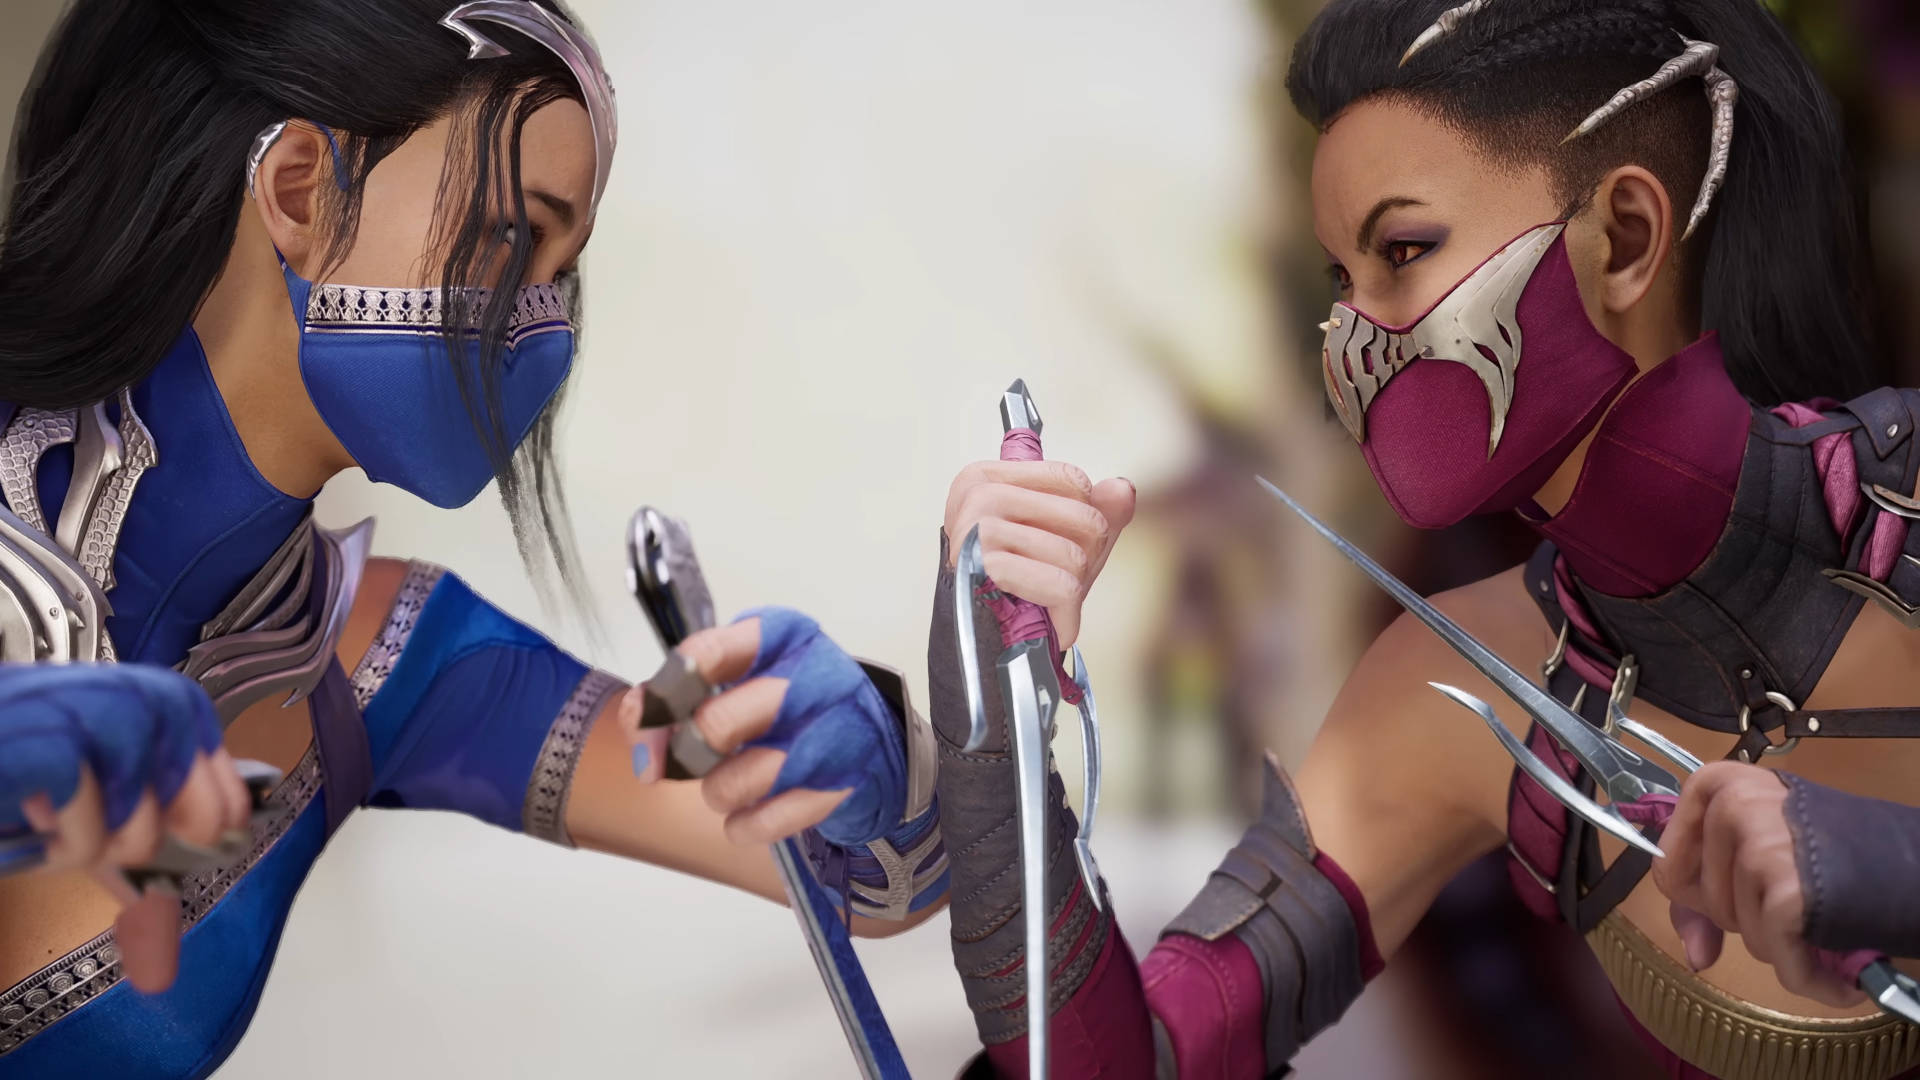 Kitana และ Mileena ได้รับการยืนยันว่า Mortal Kombat 1 ตัวละครที่เล่นได้ซึ่งกำลังปะทะกันก่อนที่การต่อสู้จะเริ่มขึ้น